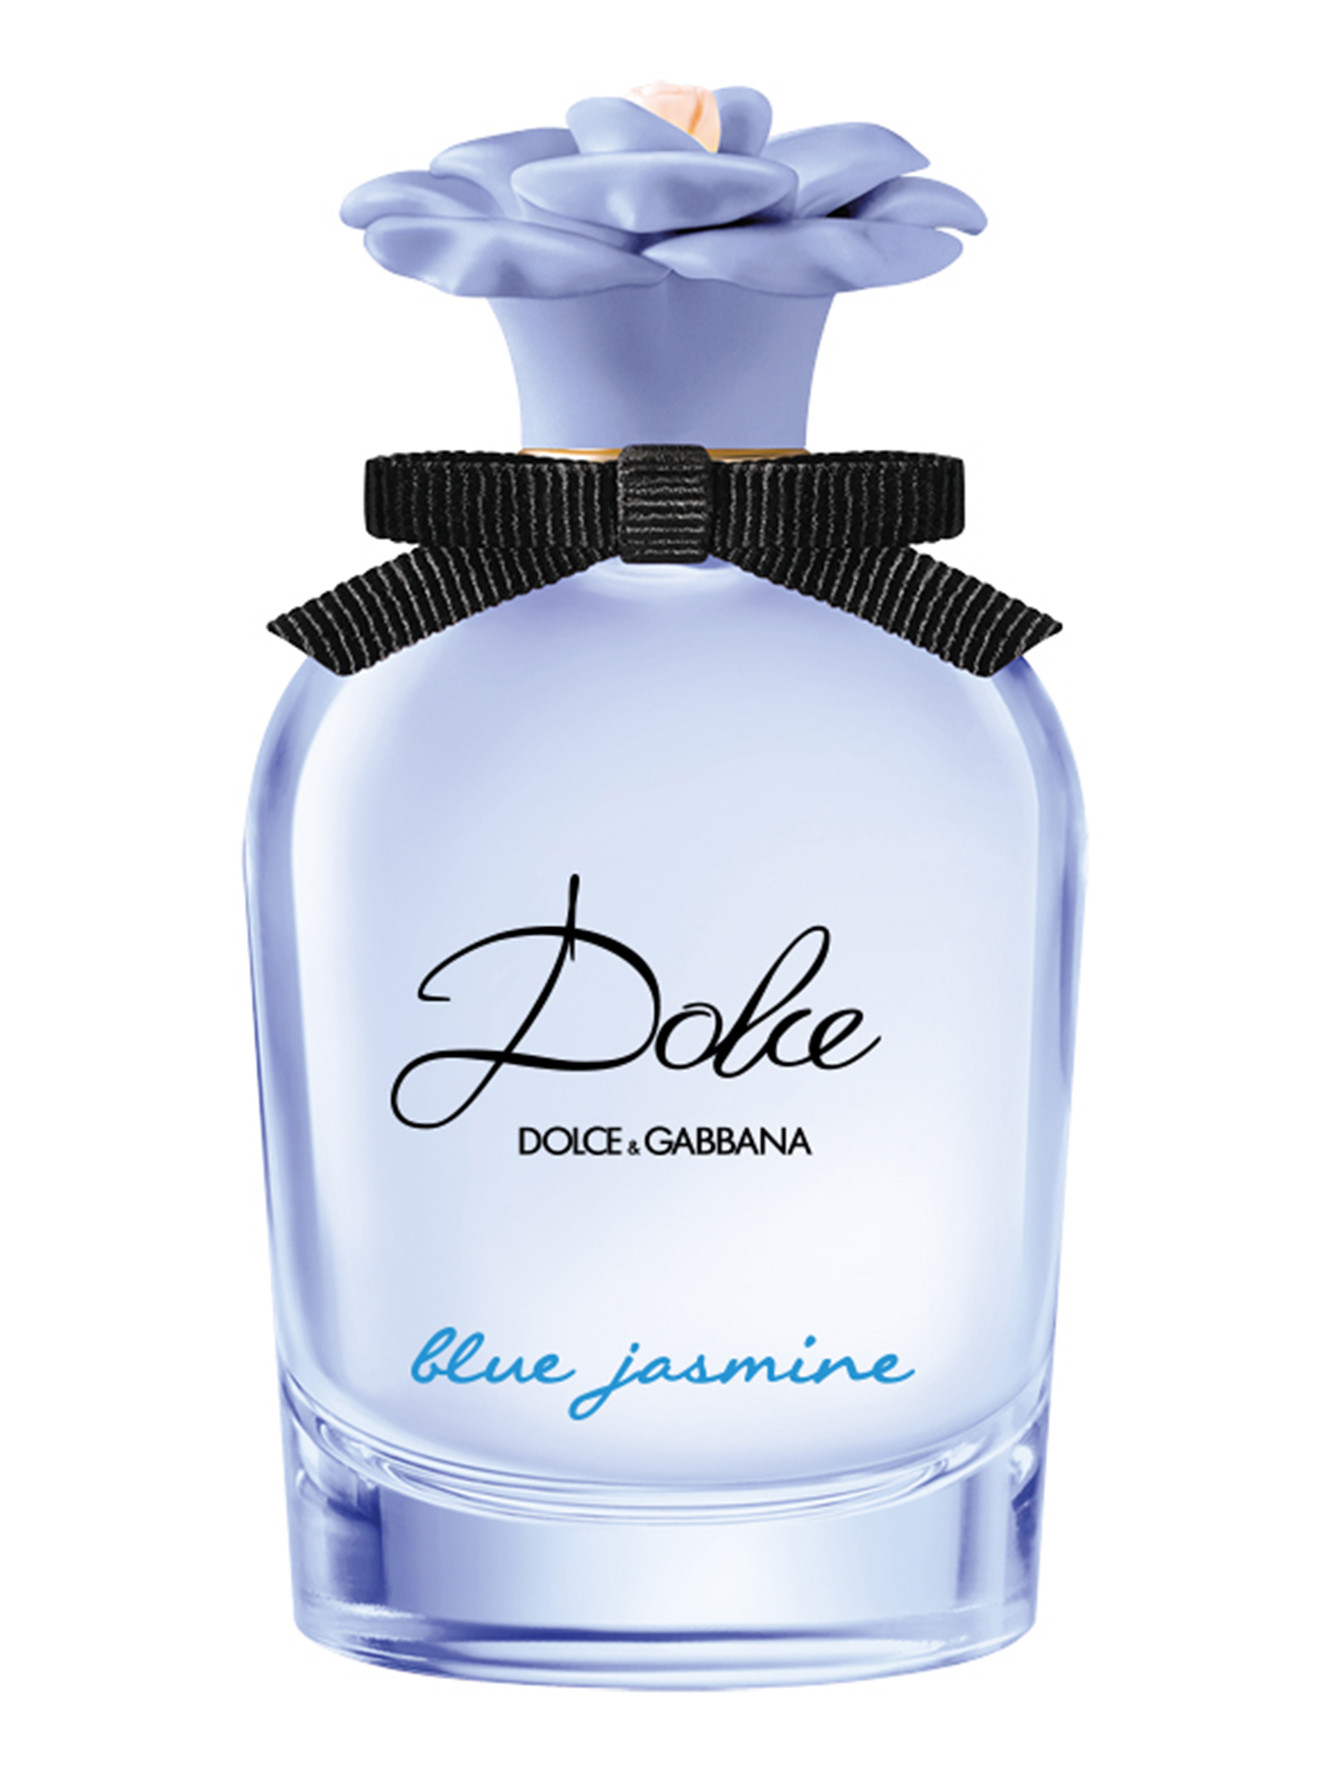 Парфюмерная вода Dolce Blue Jasmine, 50 мл - Общий вид